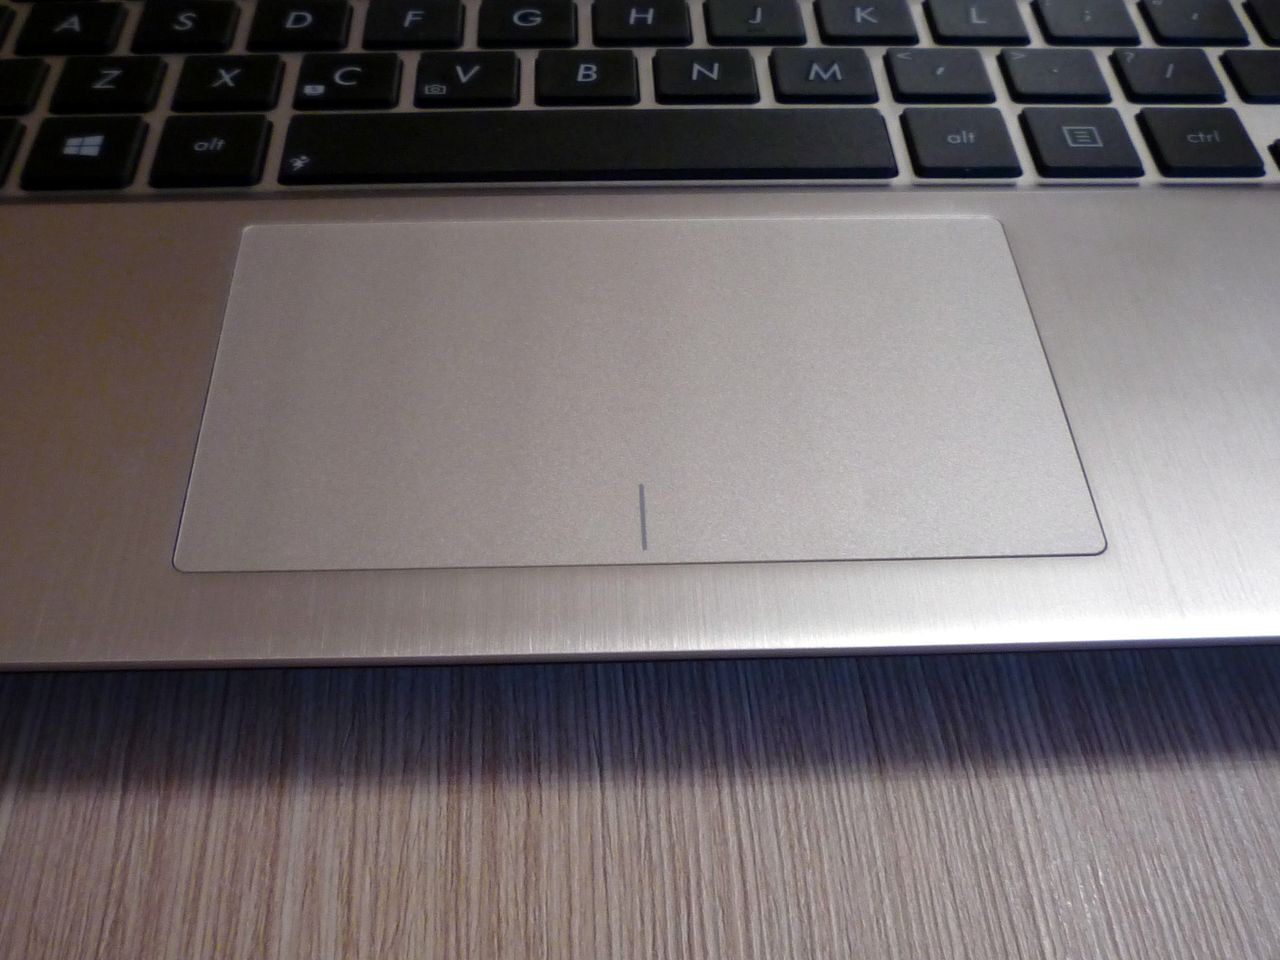 Asus VivoBook X202E - touchpad